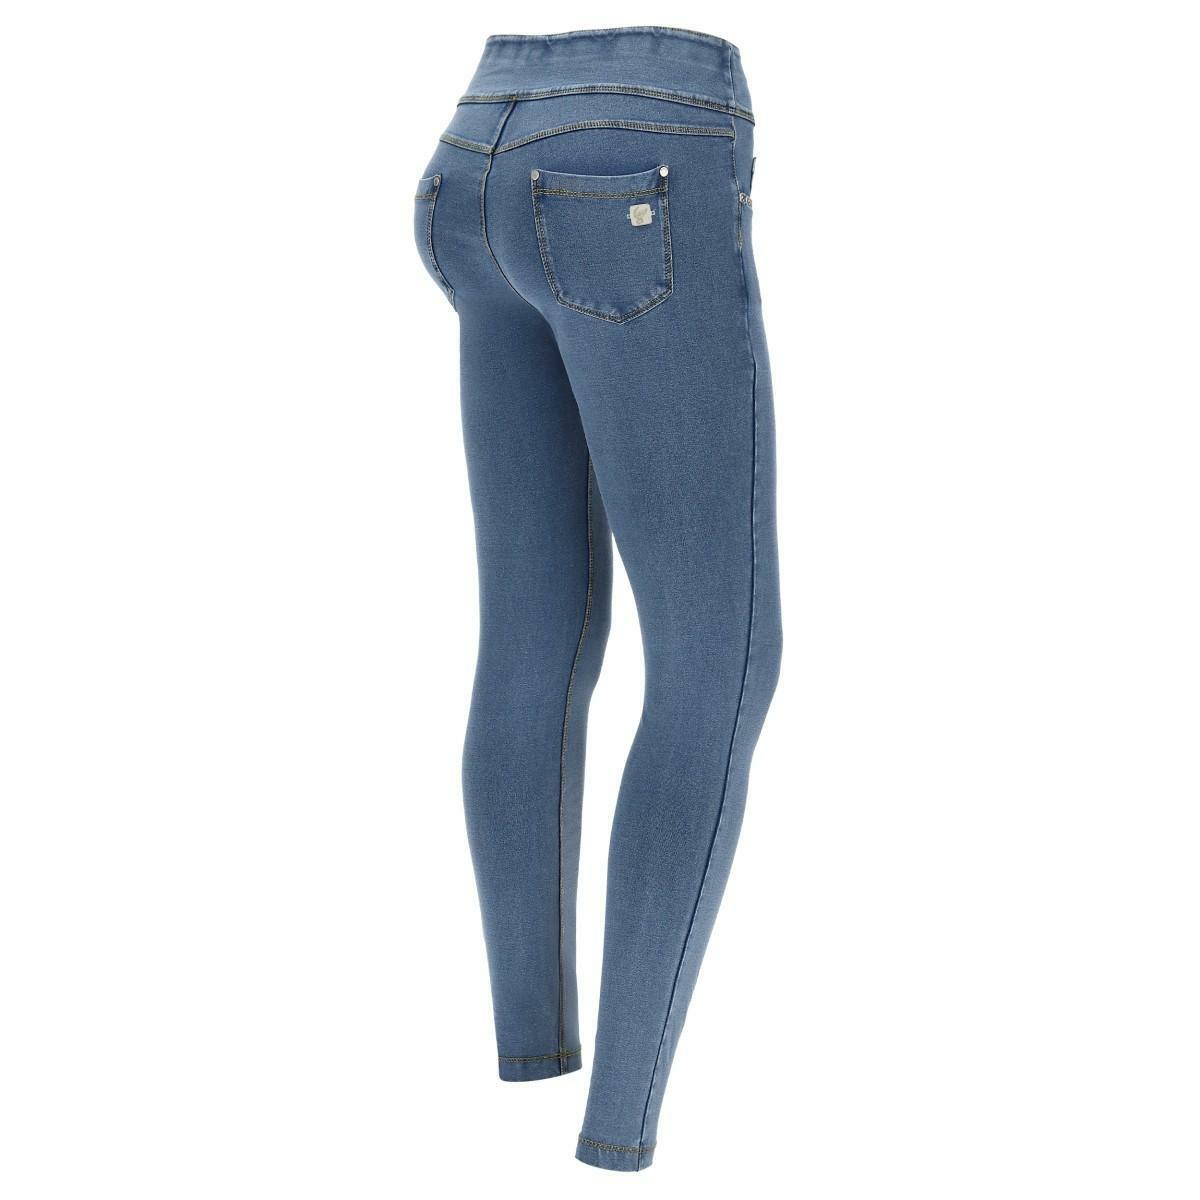 freddy freddy nowy1mc002 pantalone now vita risvoltabile donna jeans